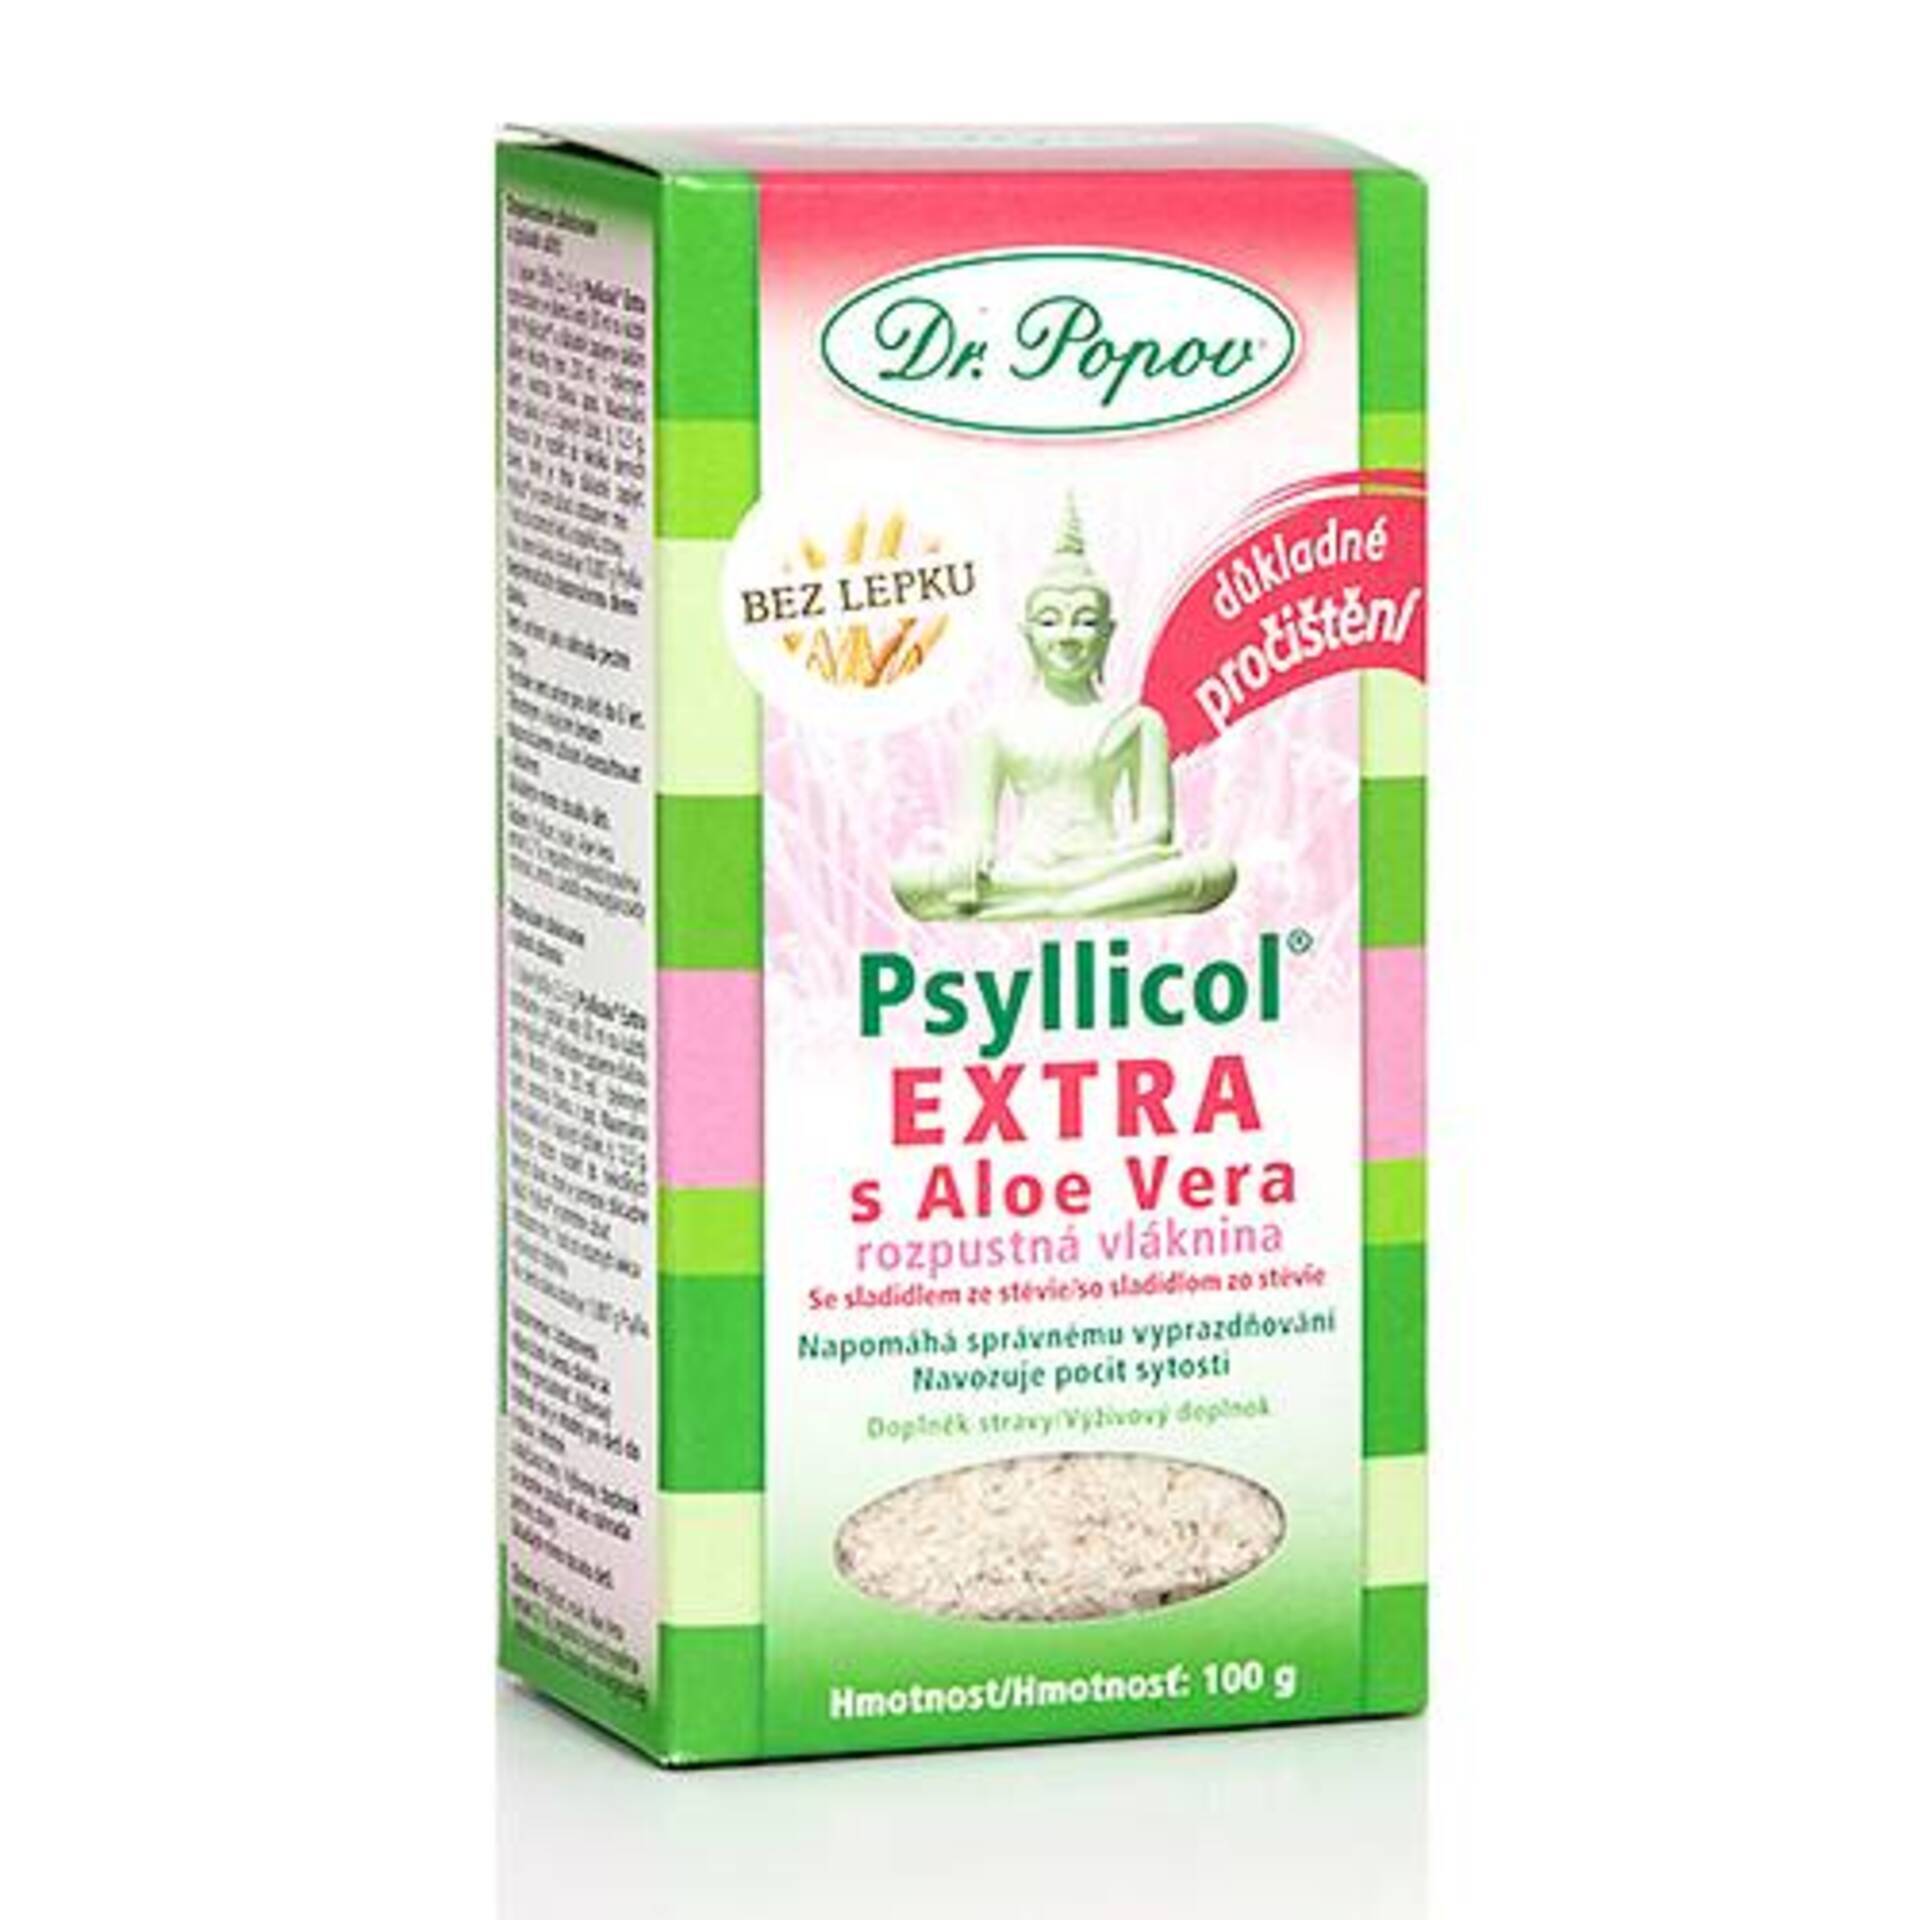 Dr. Popov psyllicol extra s aloe vera 100 g  expirace